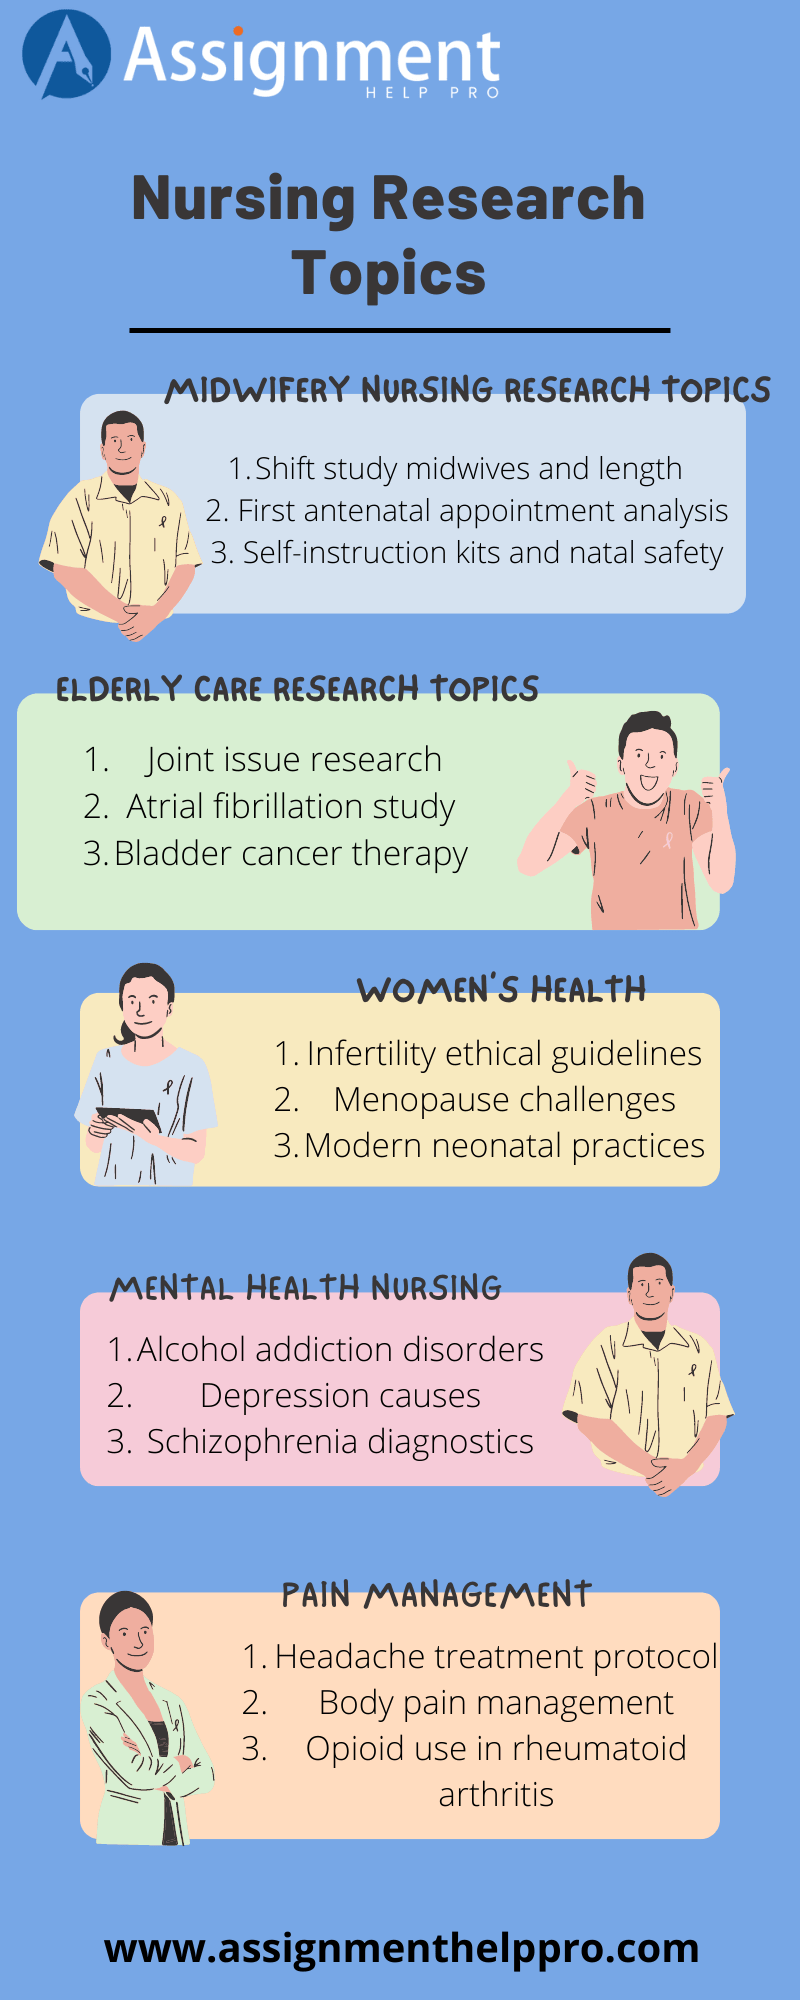 samples of research topics in nursing